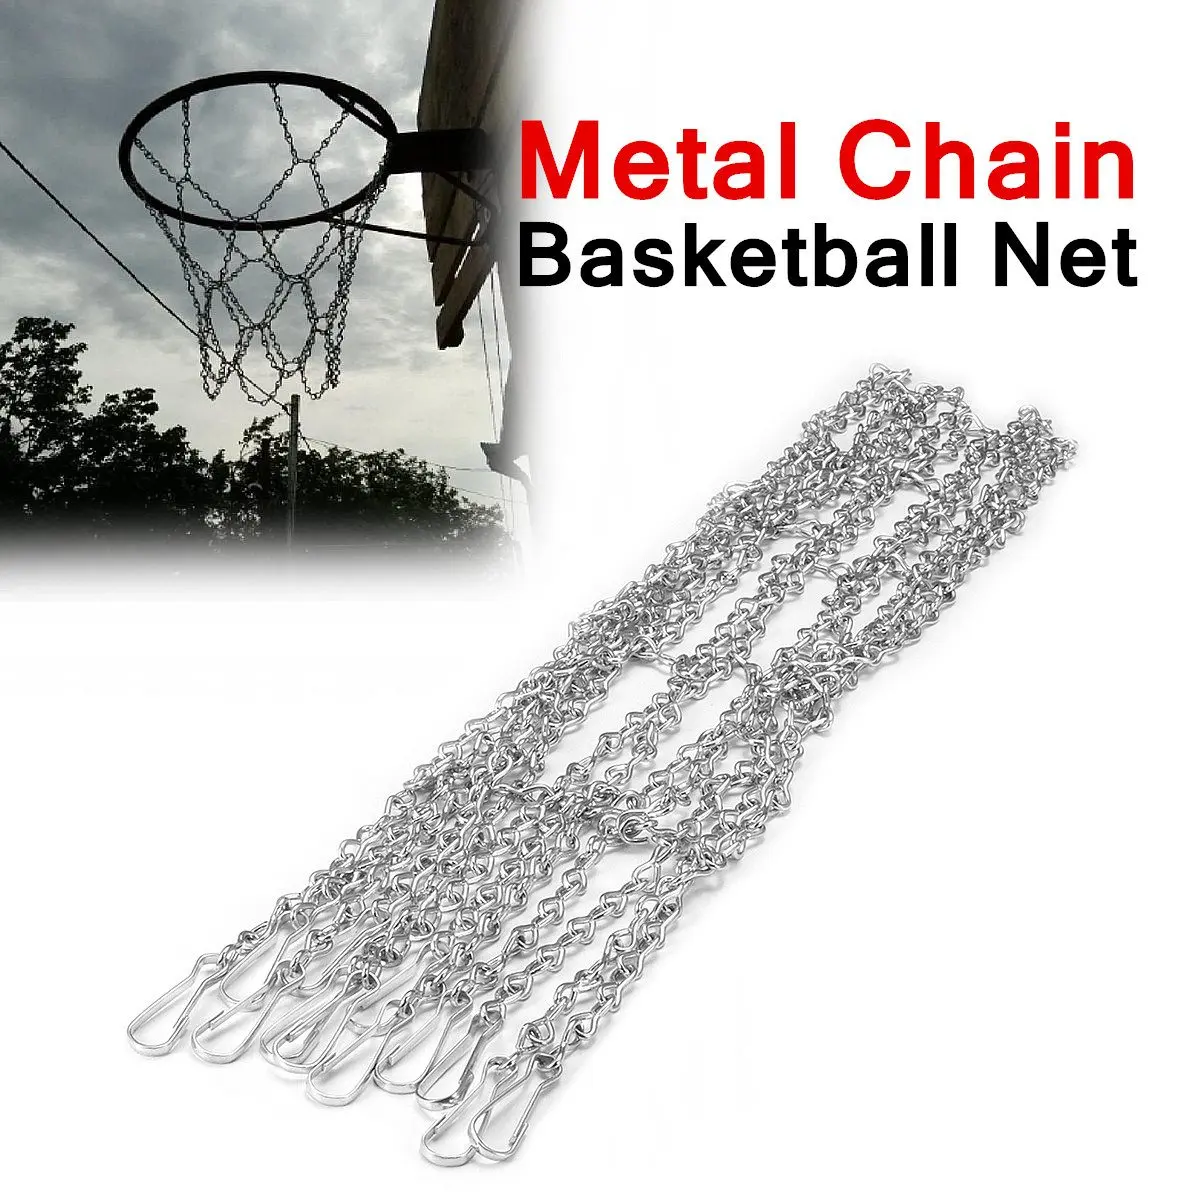 Košarkaški Metalne Lančane prepleta izdvajanje cinka postali 12 Petlje Srebrna Klin, Dizajn Standardna sadnja Za Obruča Jednostavan nosač je Težak- Slika 0